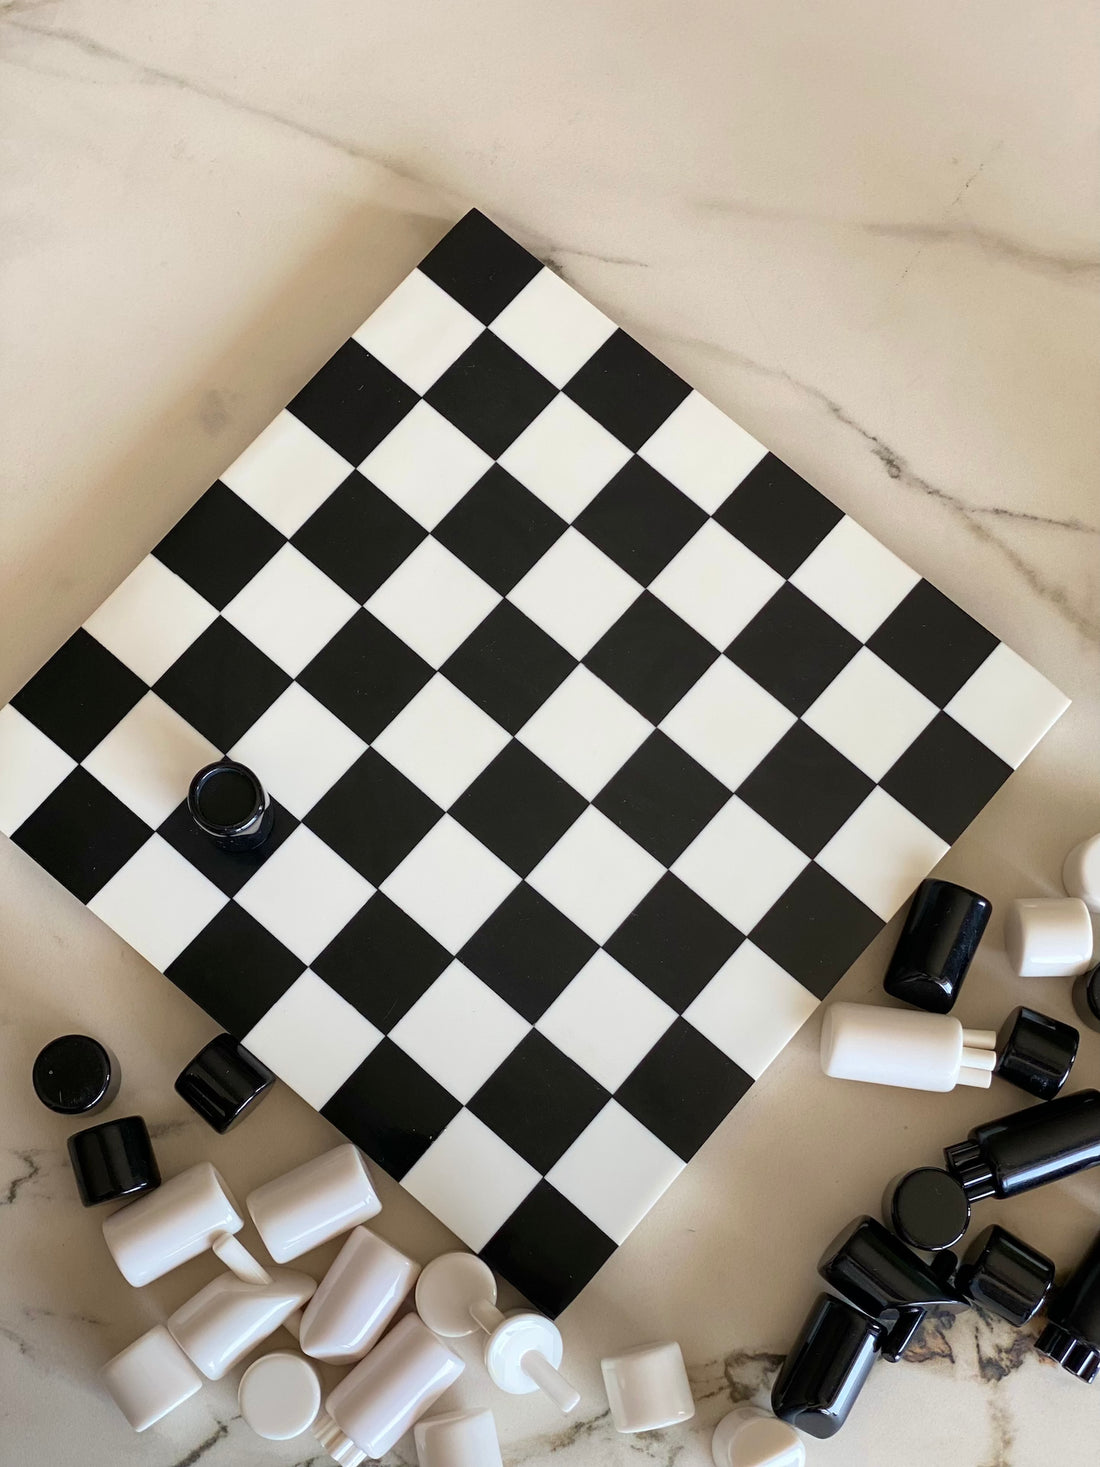 Carlo Chess Set